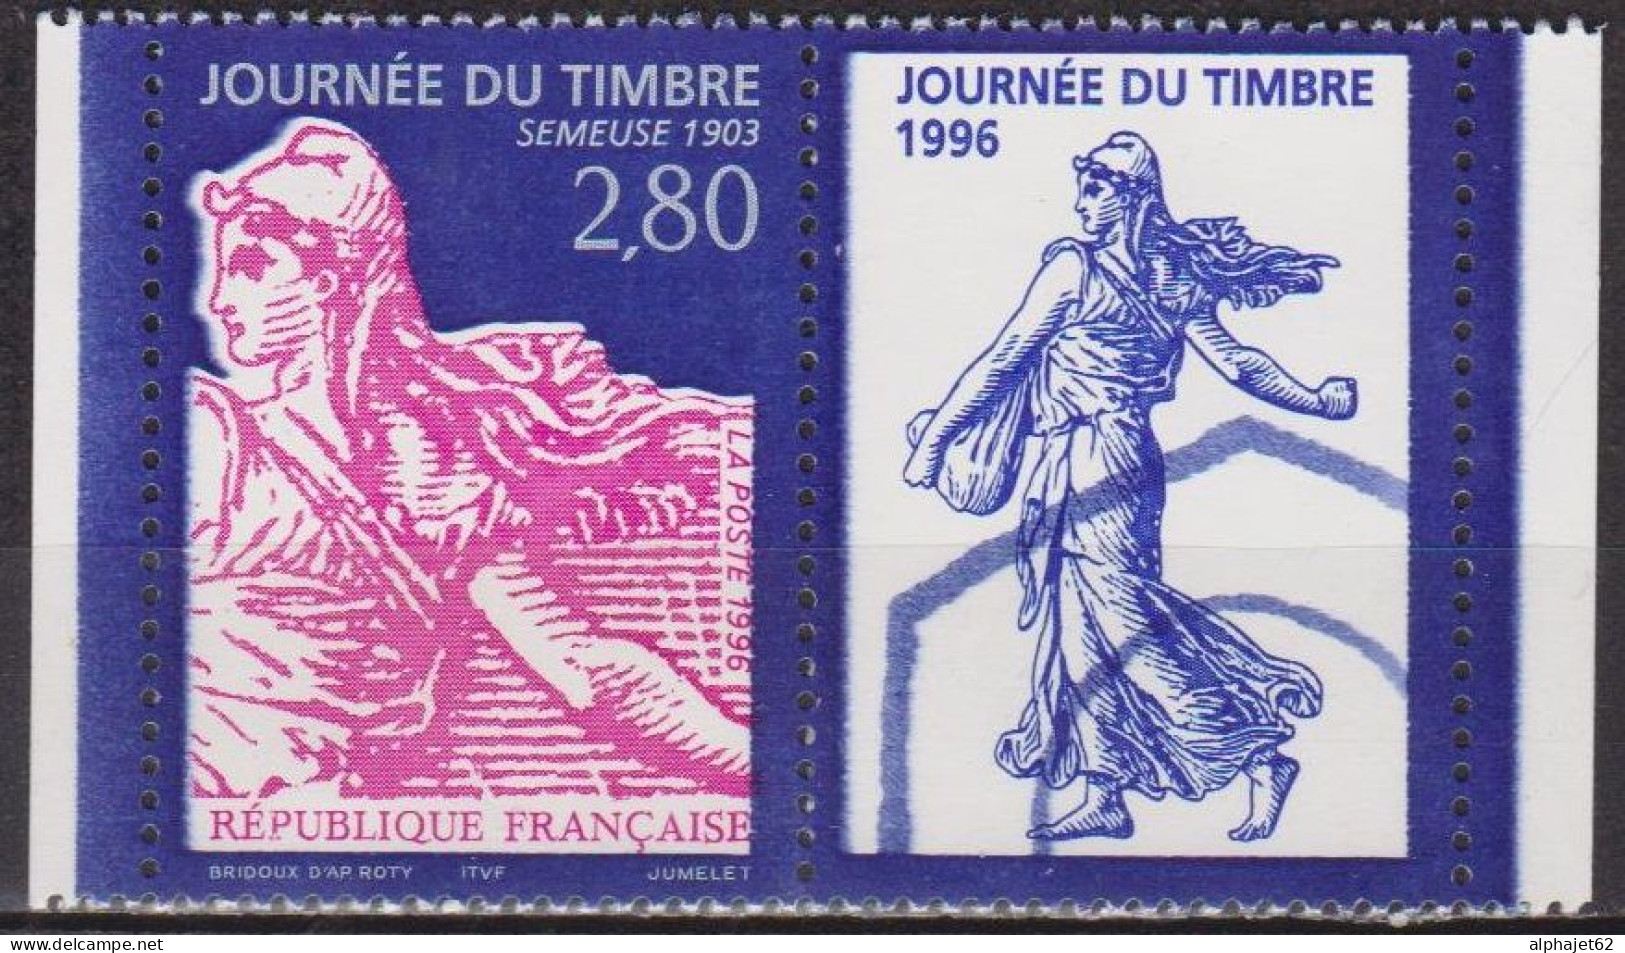 Journée Du Timbre, Type Semeuse 1903 - FRANCE - N° 2991 A ** - 1996 - Ungebraucht